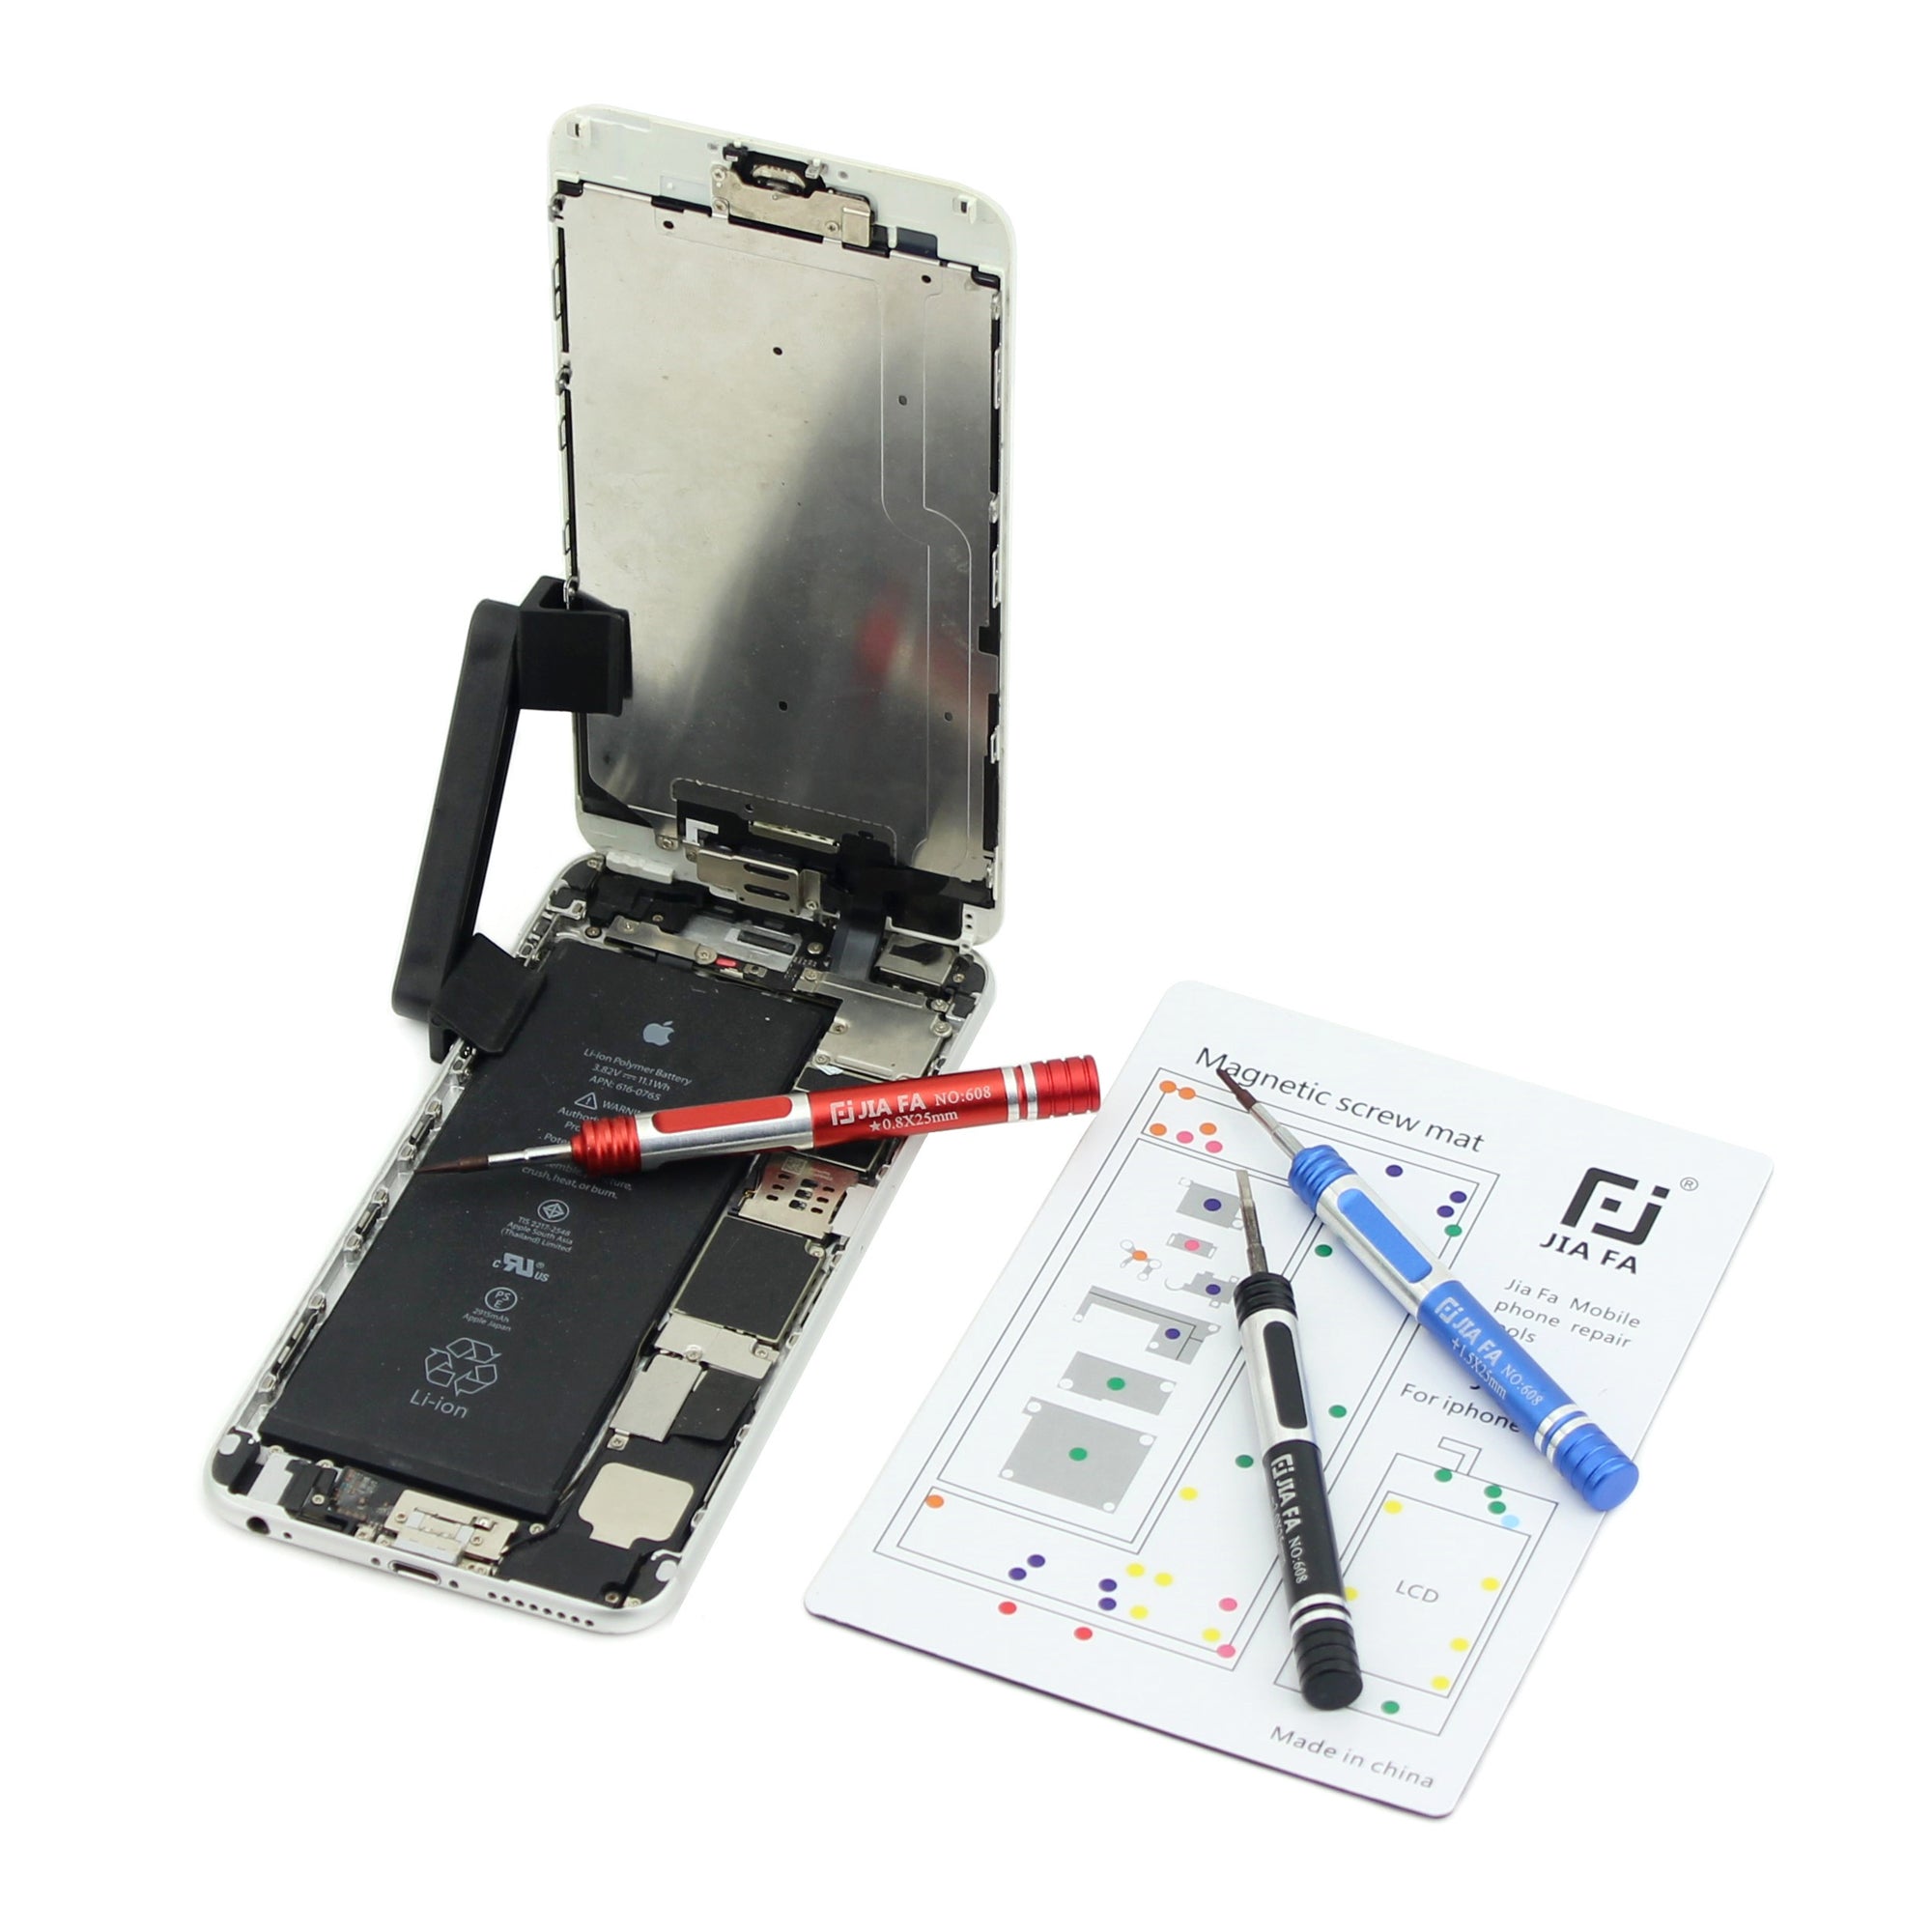 JF-870 Magnetic Screw Mat Cell Phone Repair Tool for iPhone 6 Plus 5.5-inch